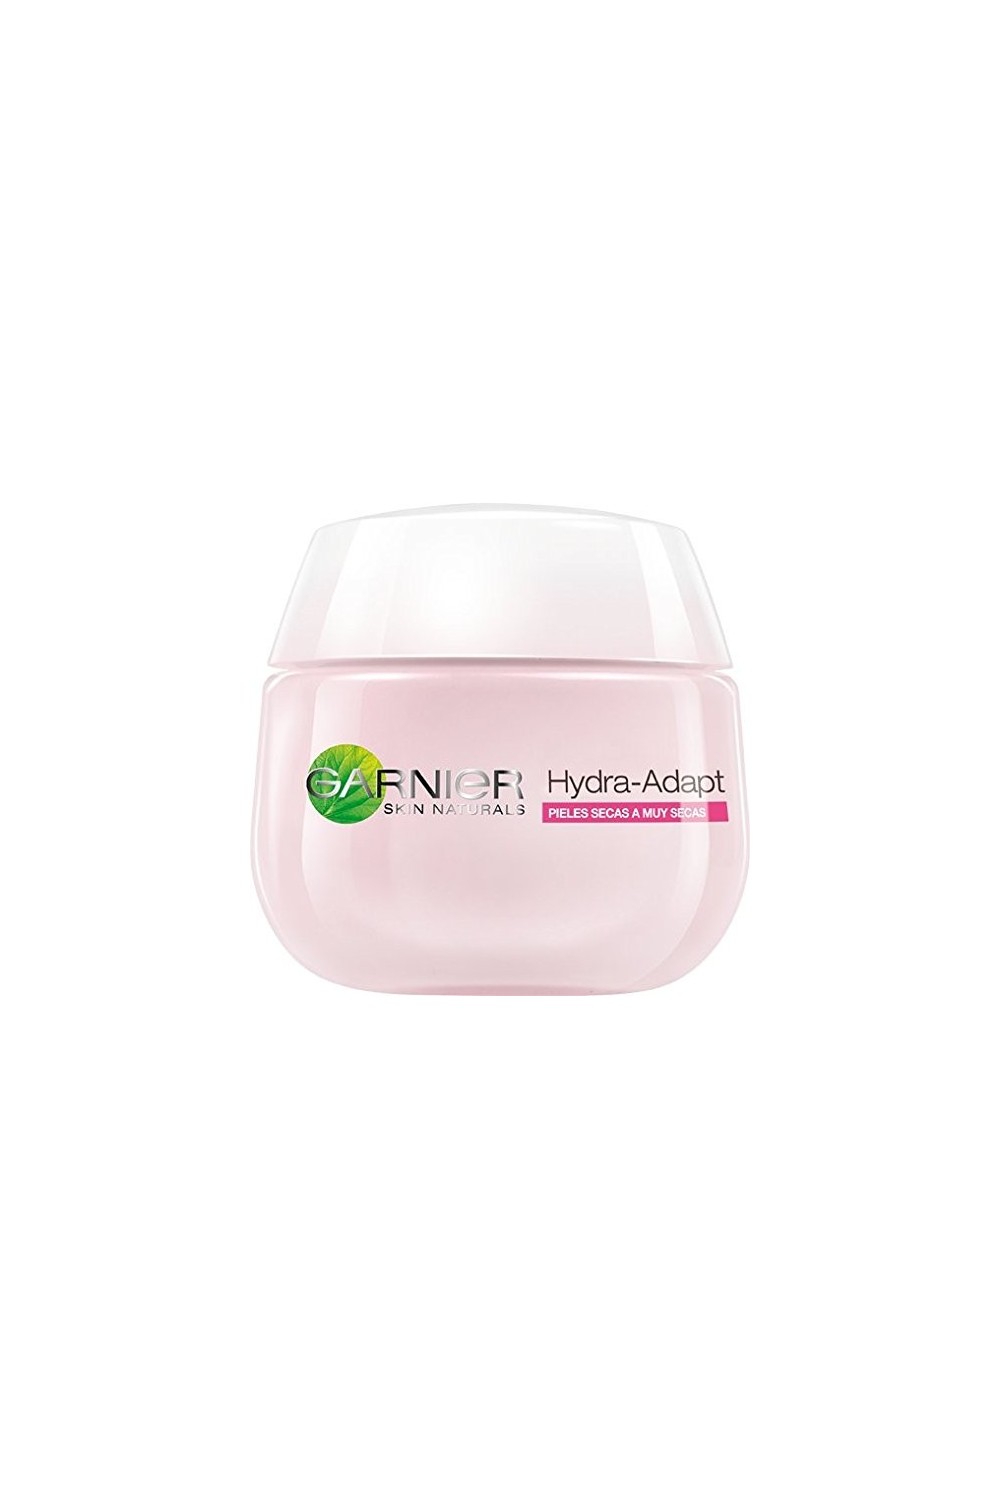 Garnier SkinActive Cream For Dry And Sensitive Skin 50ml